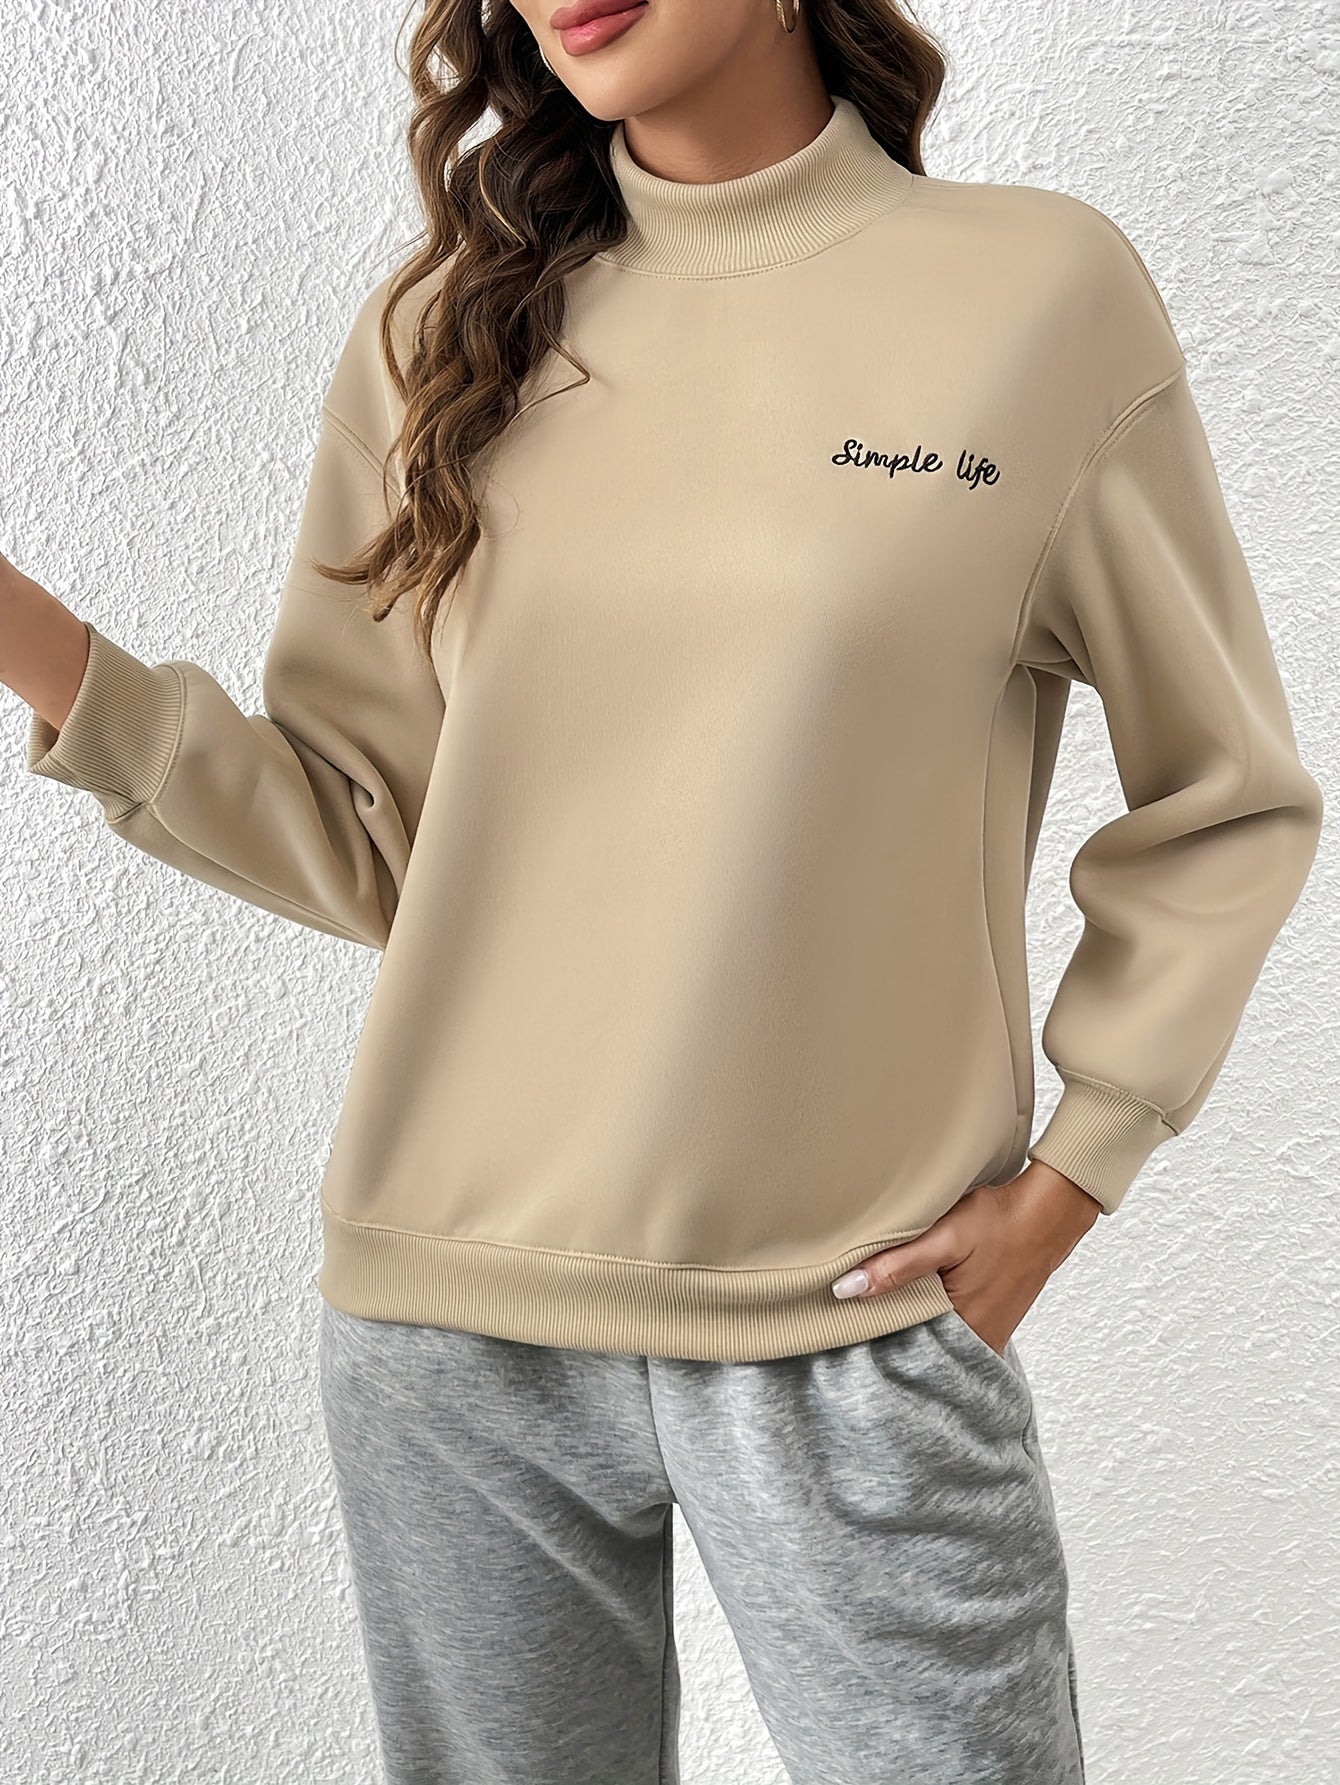 Vzyzv Letter Print Drop Shoulder Pullover Sweatshirt, Casual Long Sleeve Crew Neck Sweatshirt For Fall & Winter, Women's Clothing